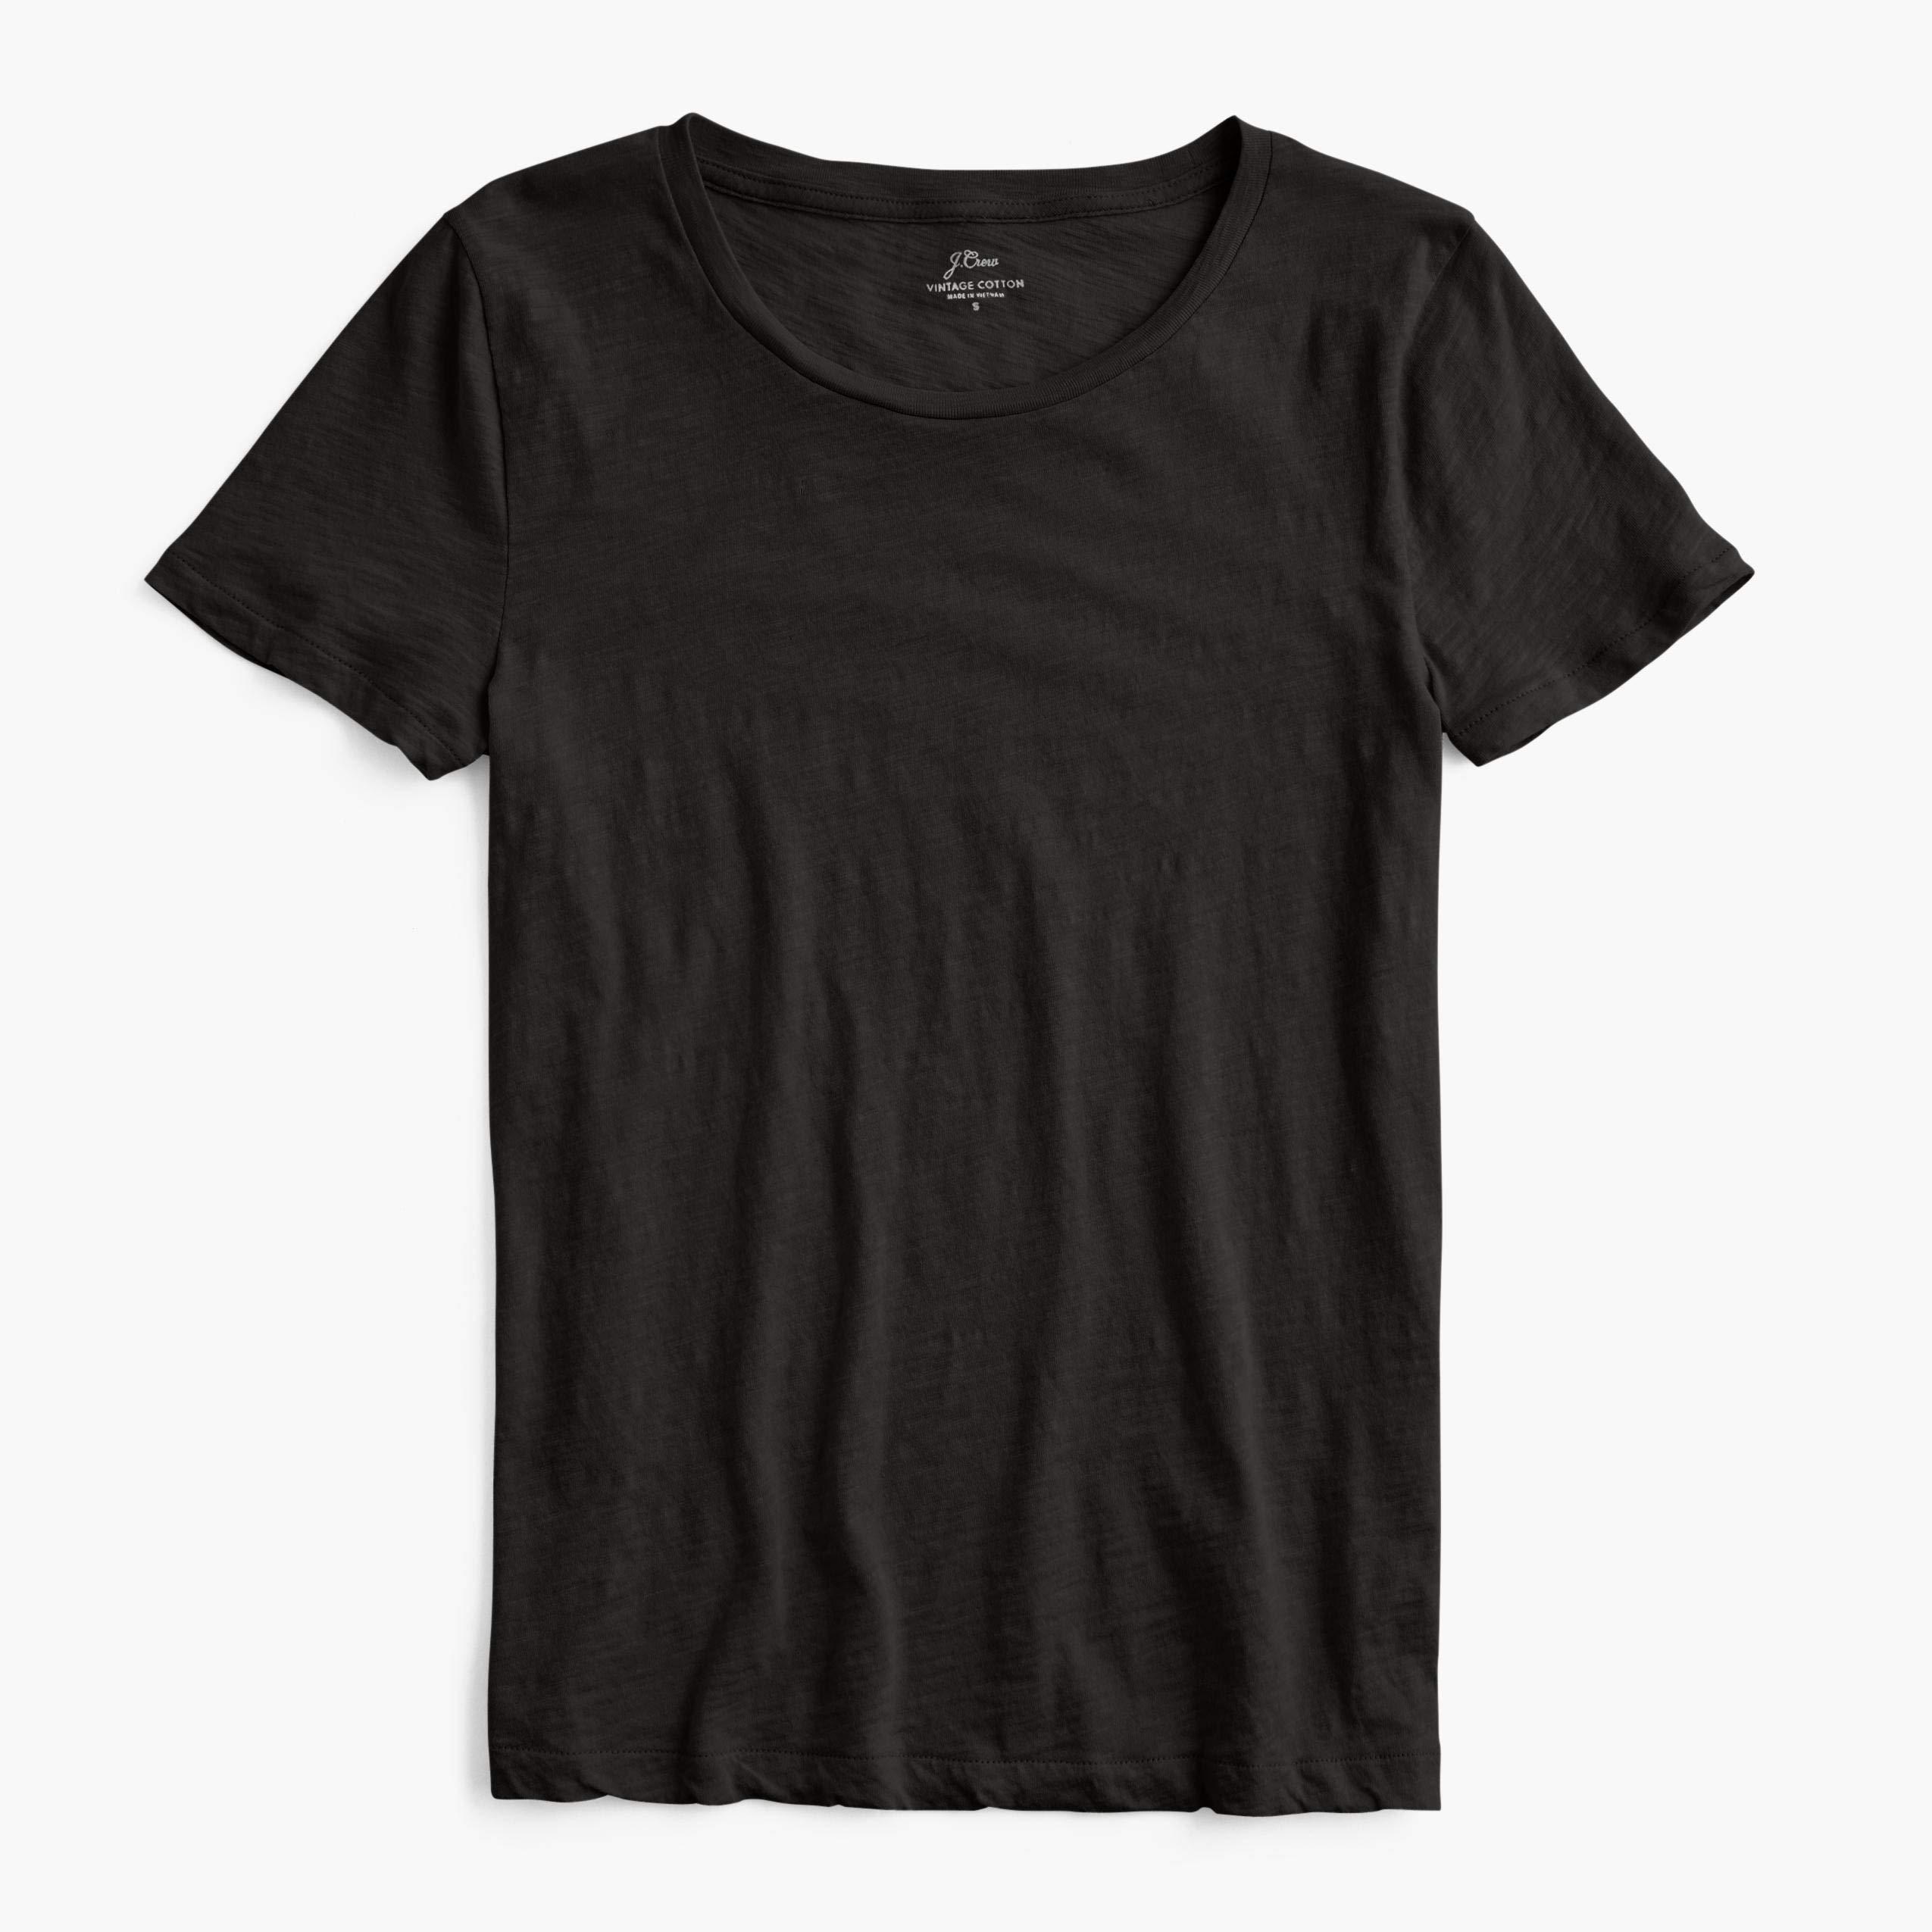 J.Crew Vintage Cotton Crew Neck T-shirt in Black - Lyst